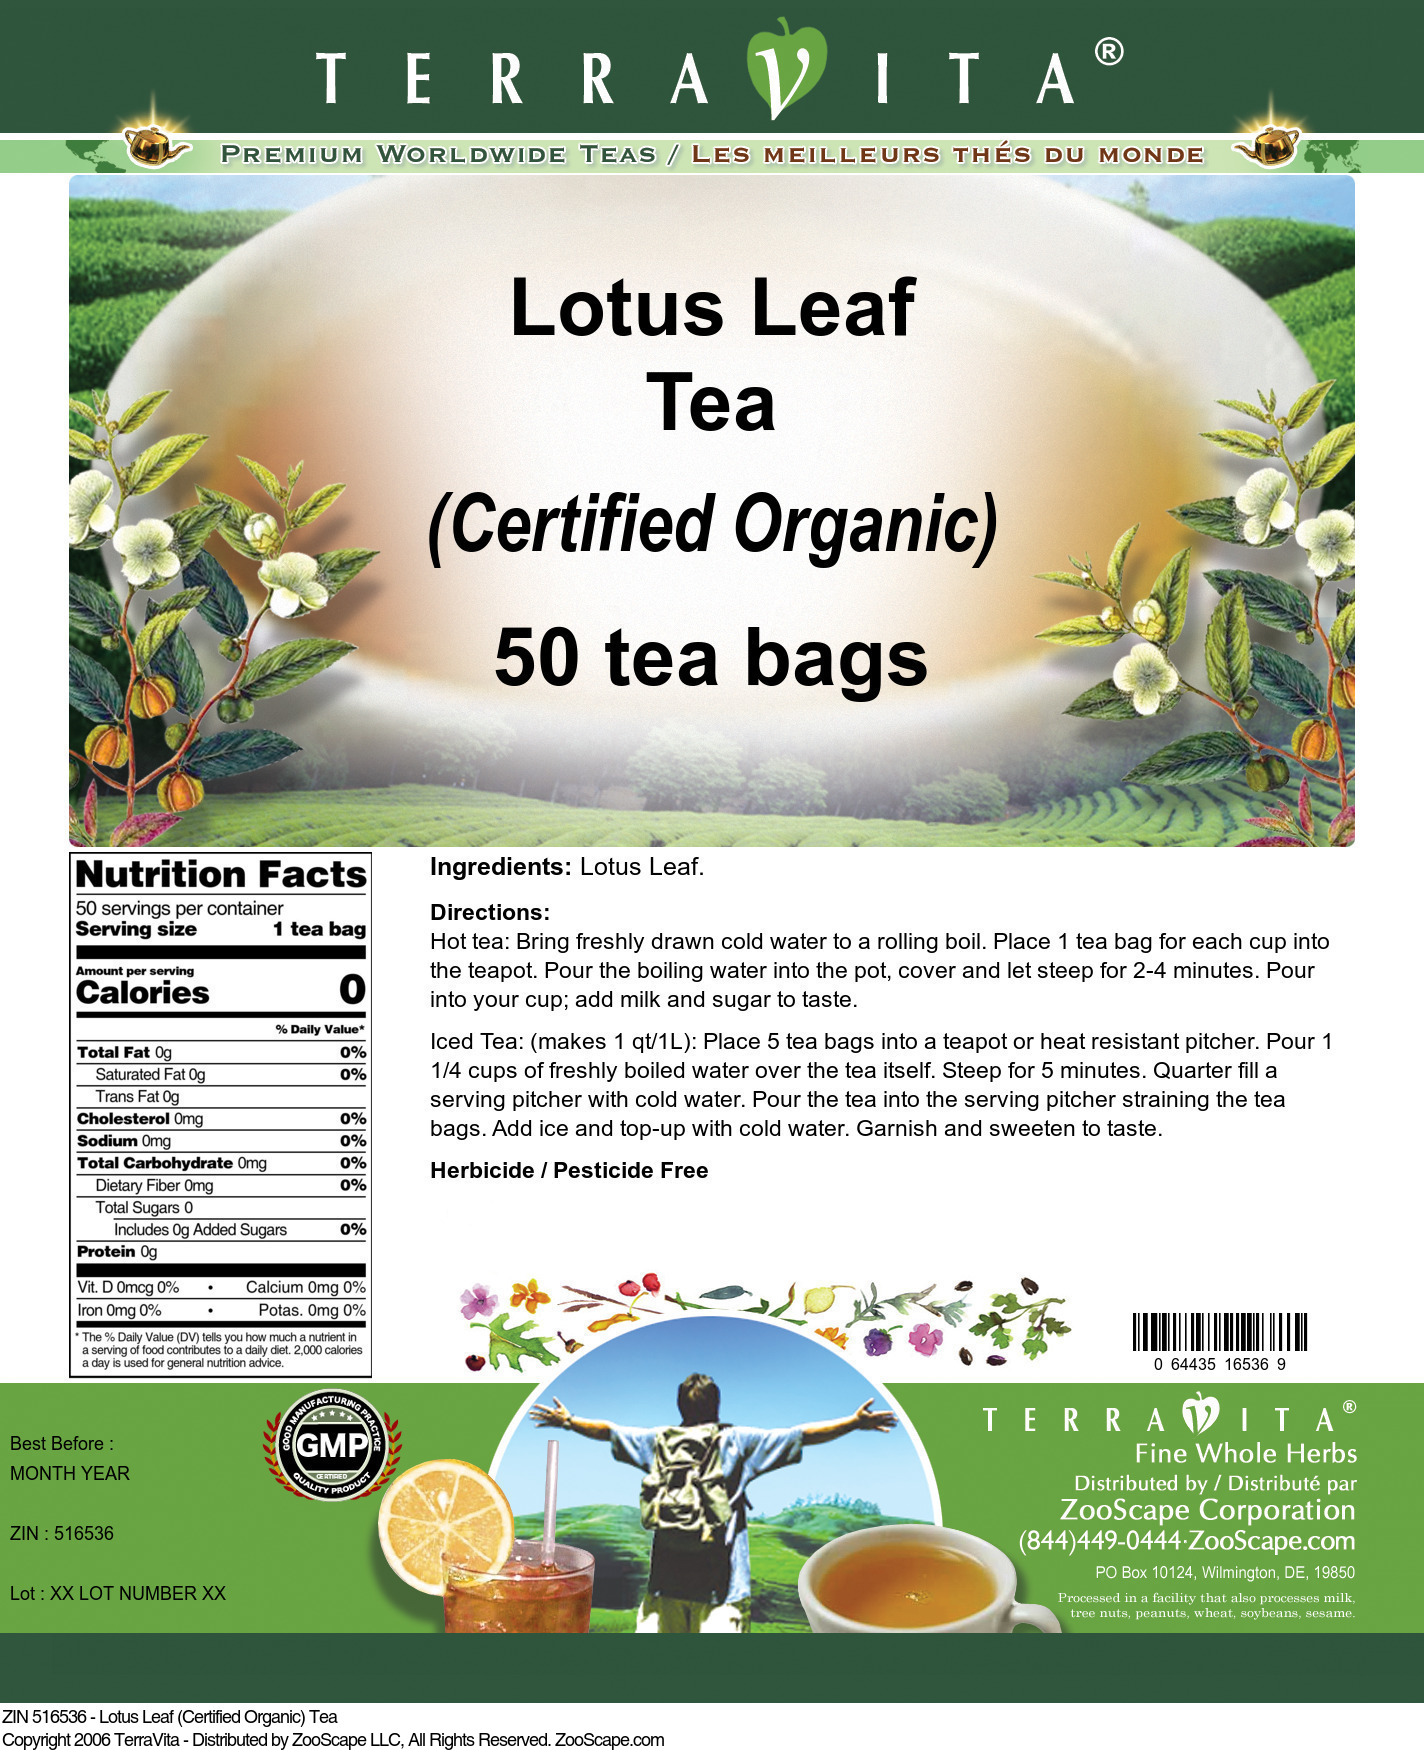 Lotus Leaf (Certified Organic) Tea - Label